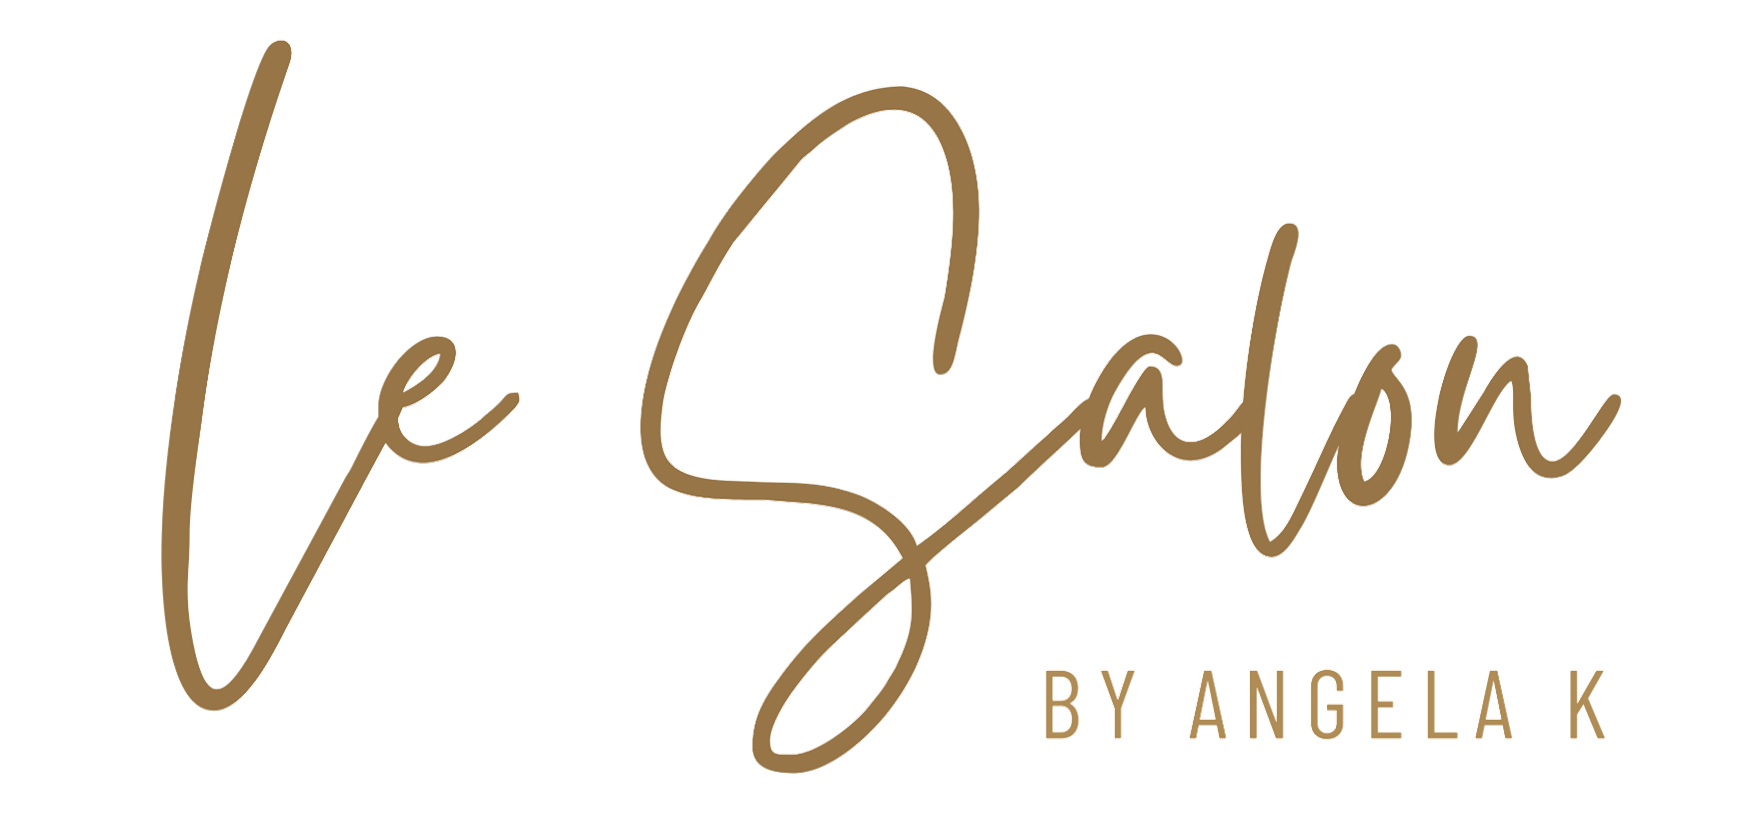 Photo of the hotel Sofitel Los Angeles at Beverly Hills: Le salon logo new logo june 2021